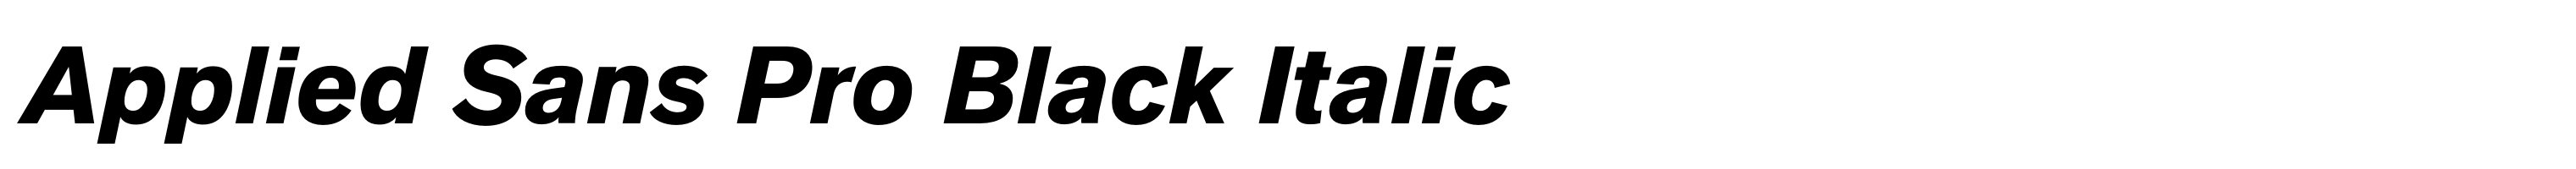 Applied Sans Pro Black Italic